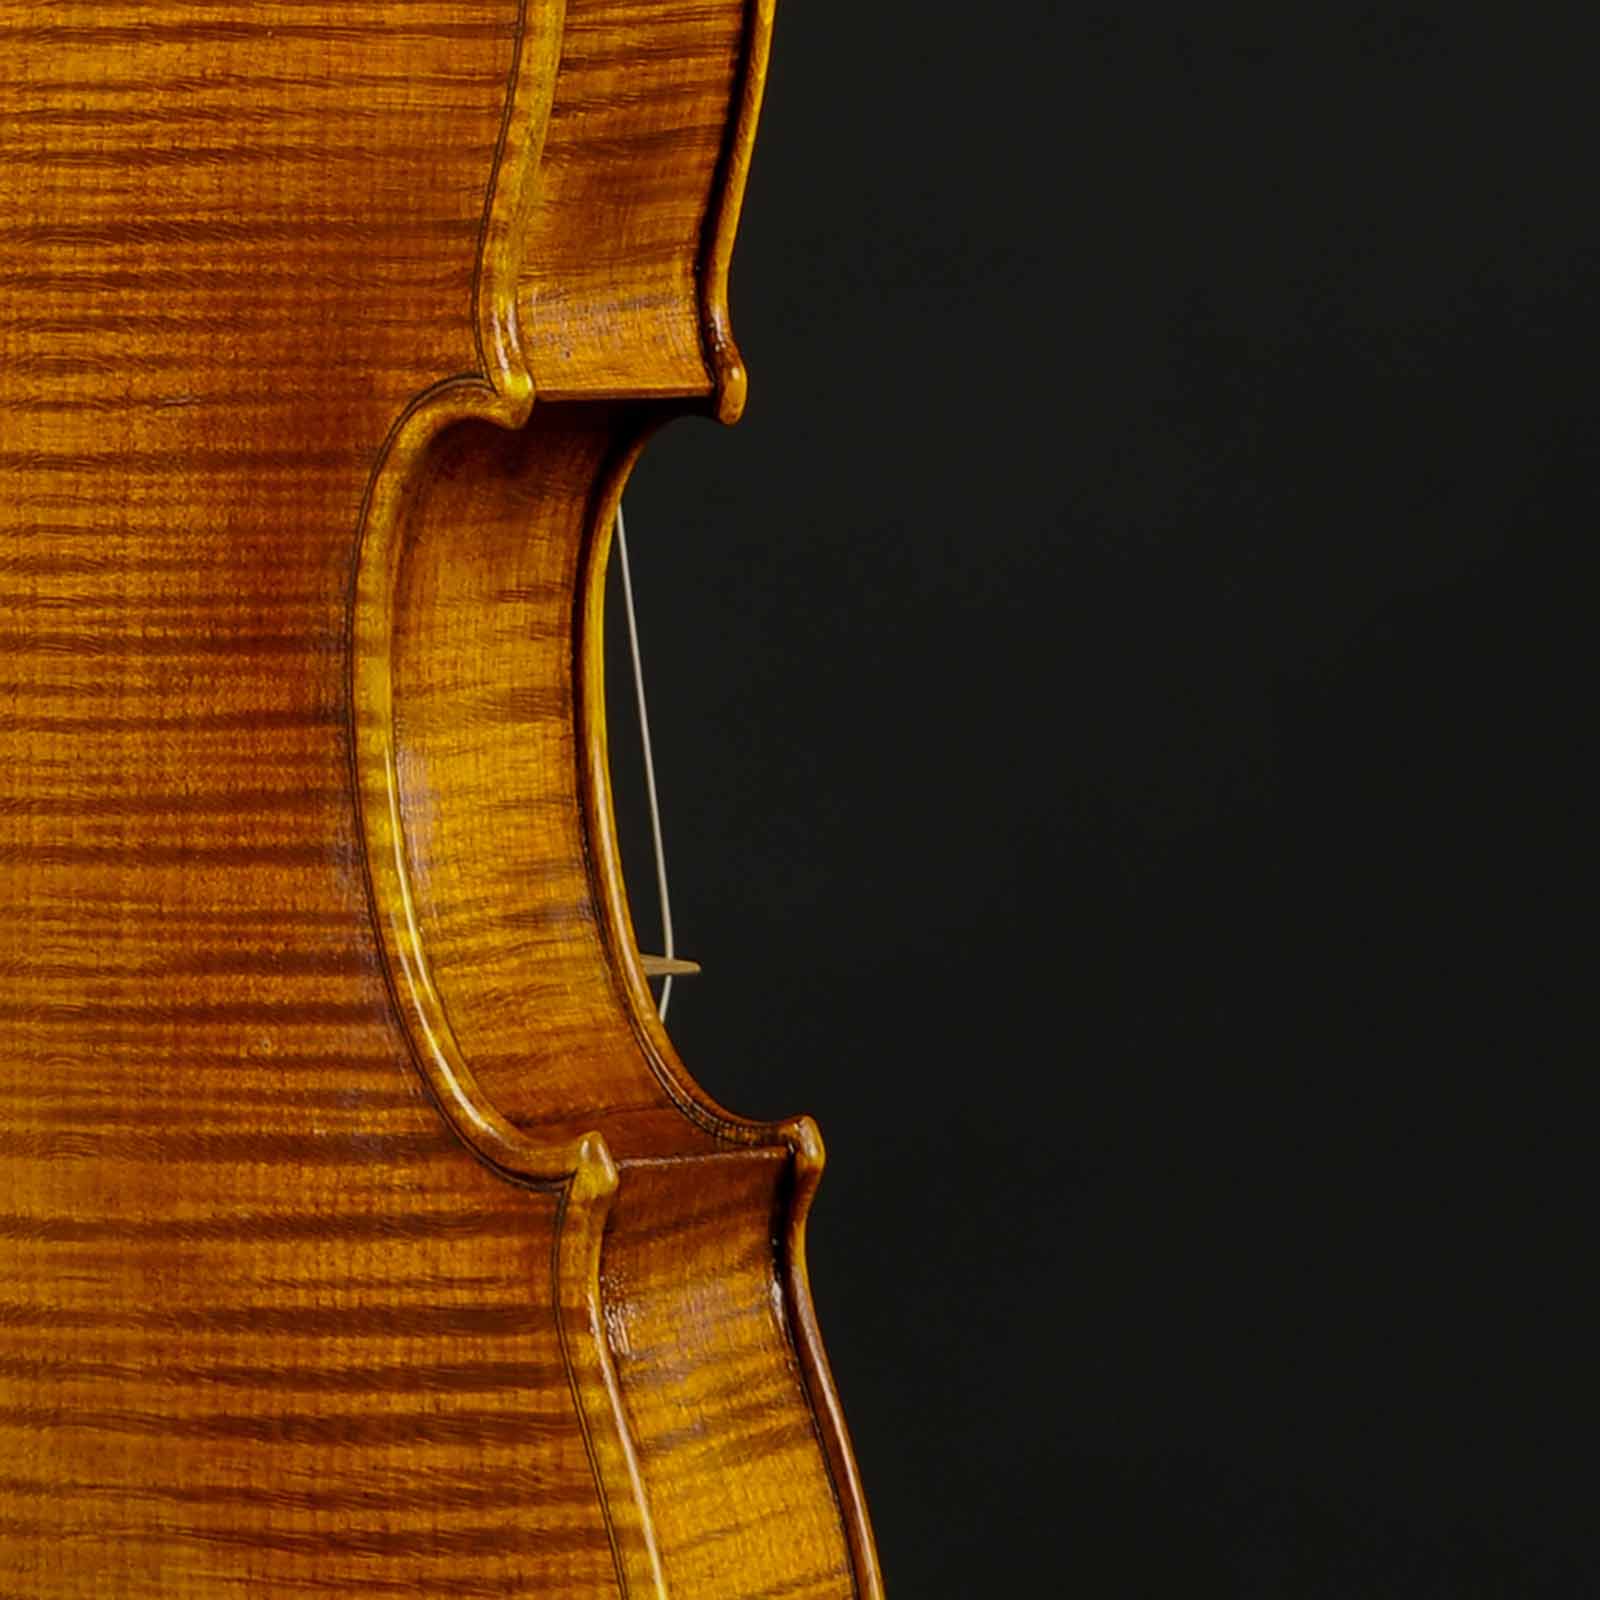 Antonio Stradivari Cremona 1715 “San Pietro“ - Image 5